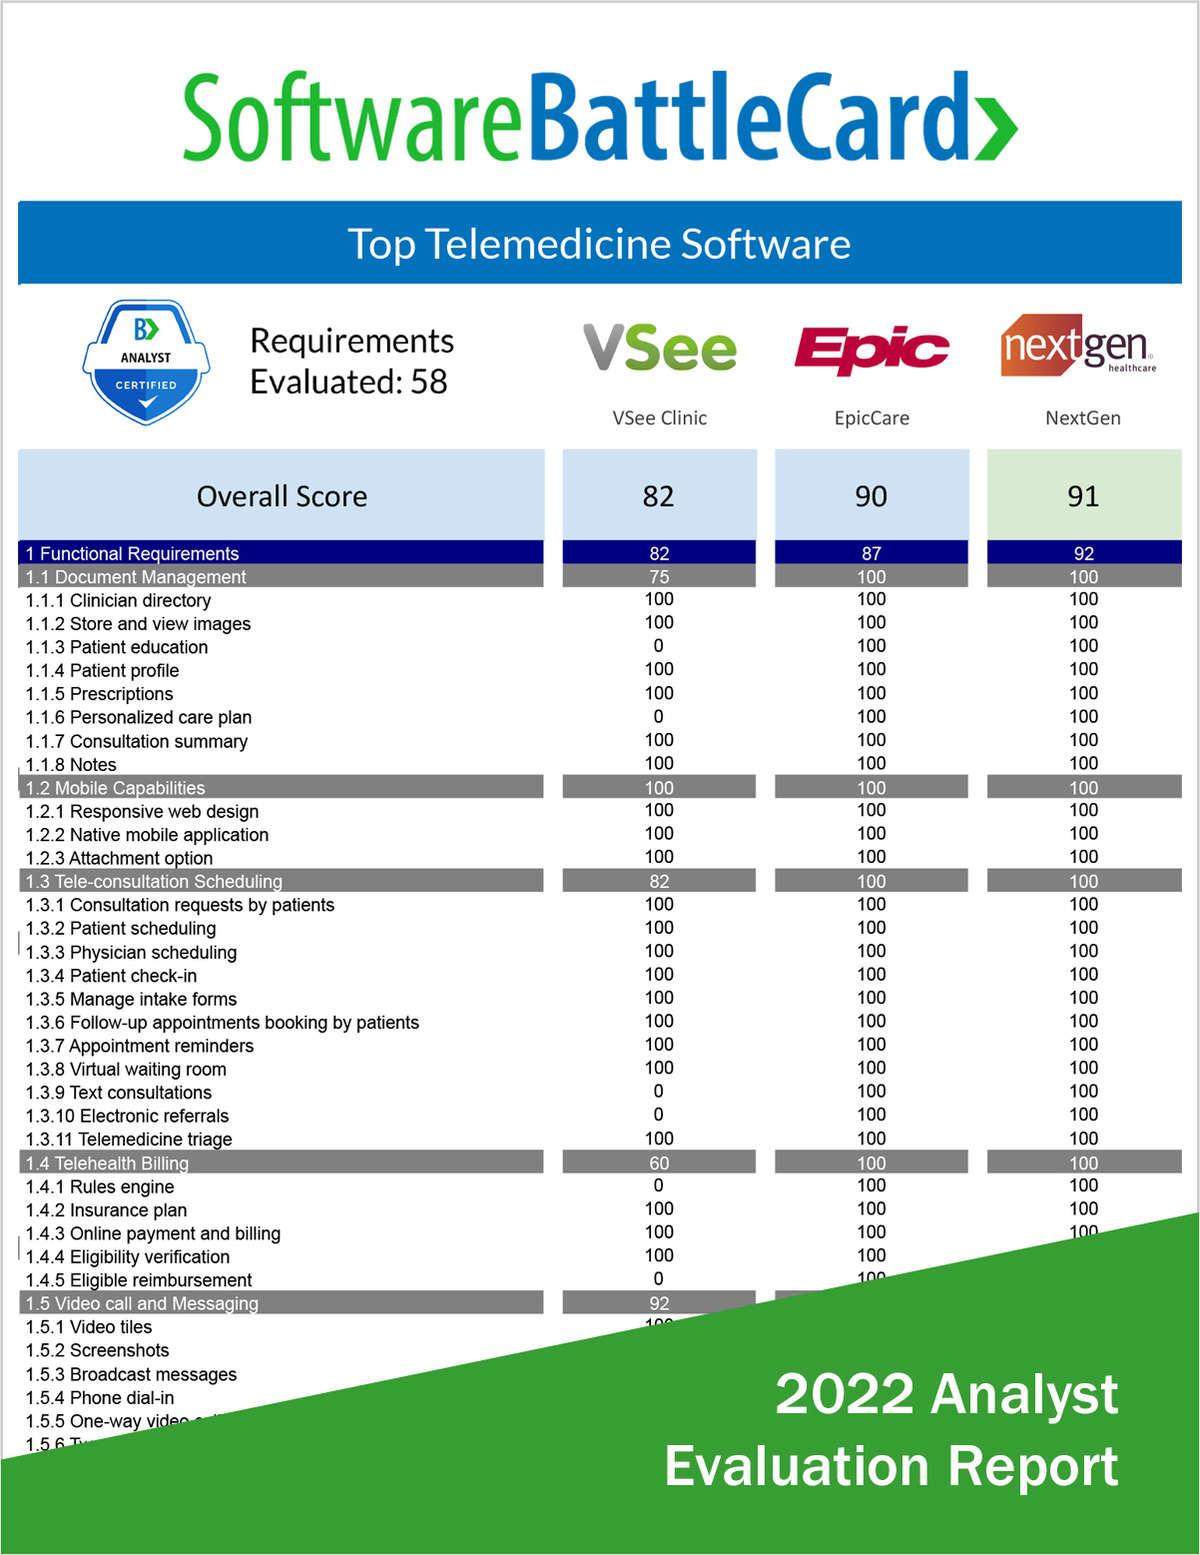 Top Telemedicine Software BattleCard--VSee Clinic vs. EpicCare vs. NextGen